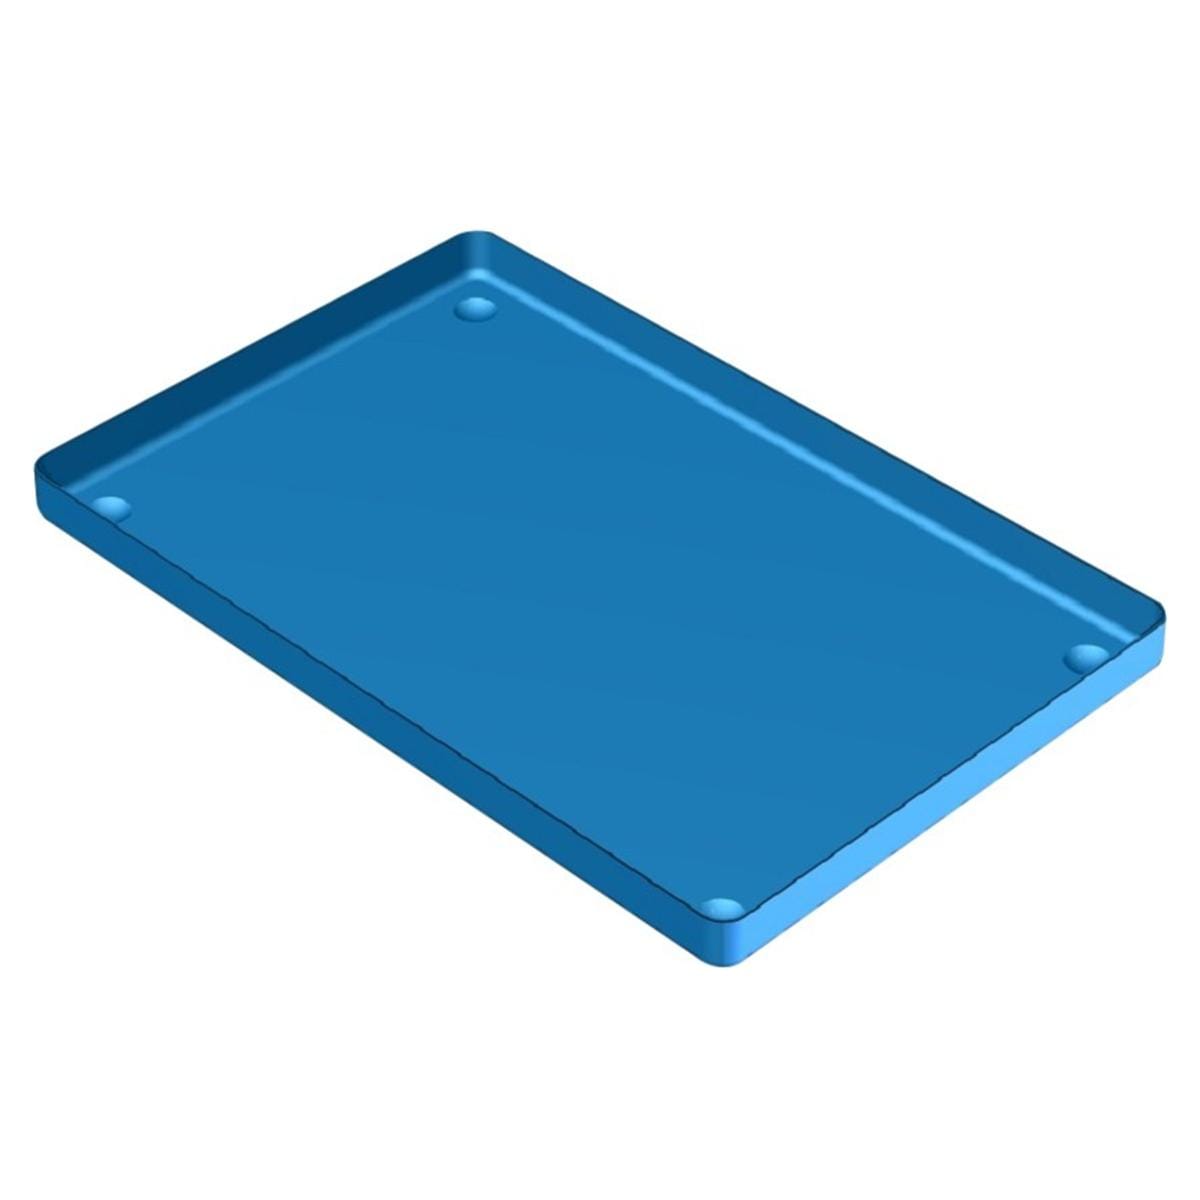 Aluminiumtray - Unterteil - Blau, Größe 28 x 18 cm